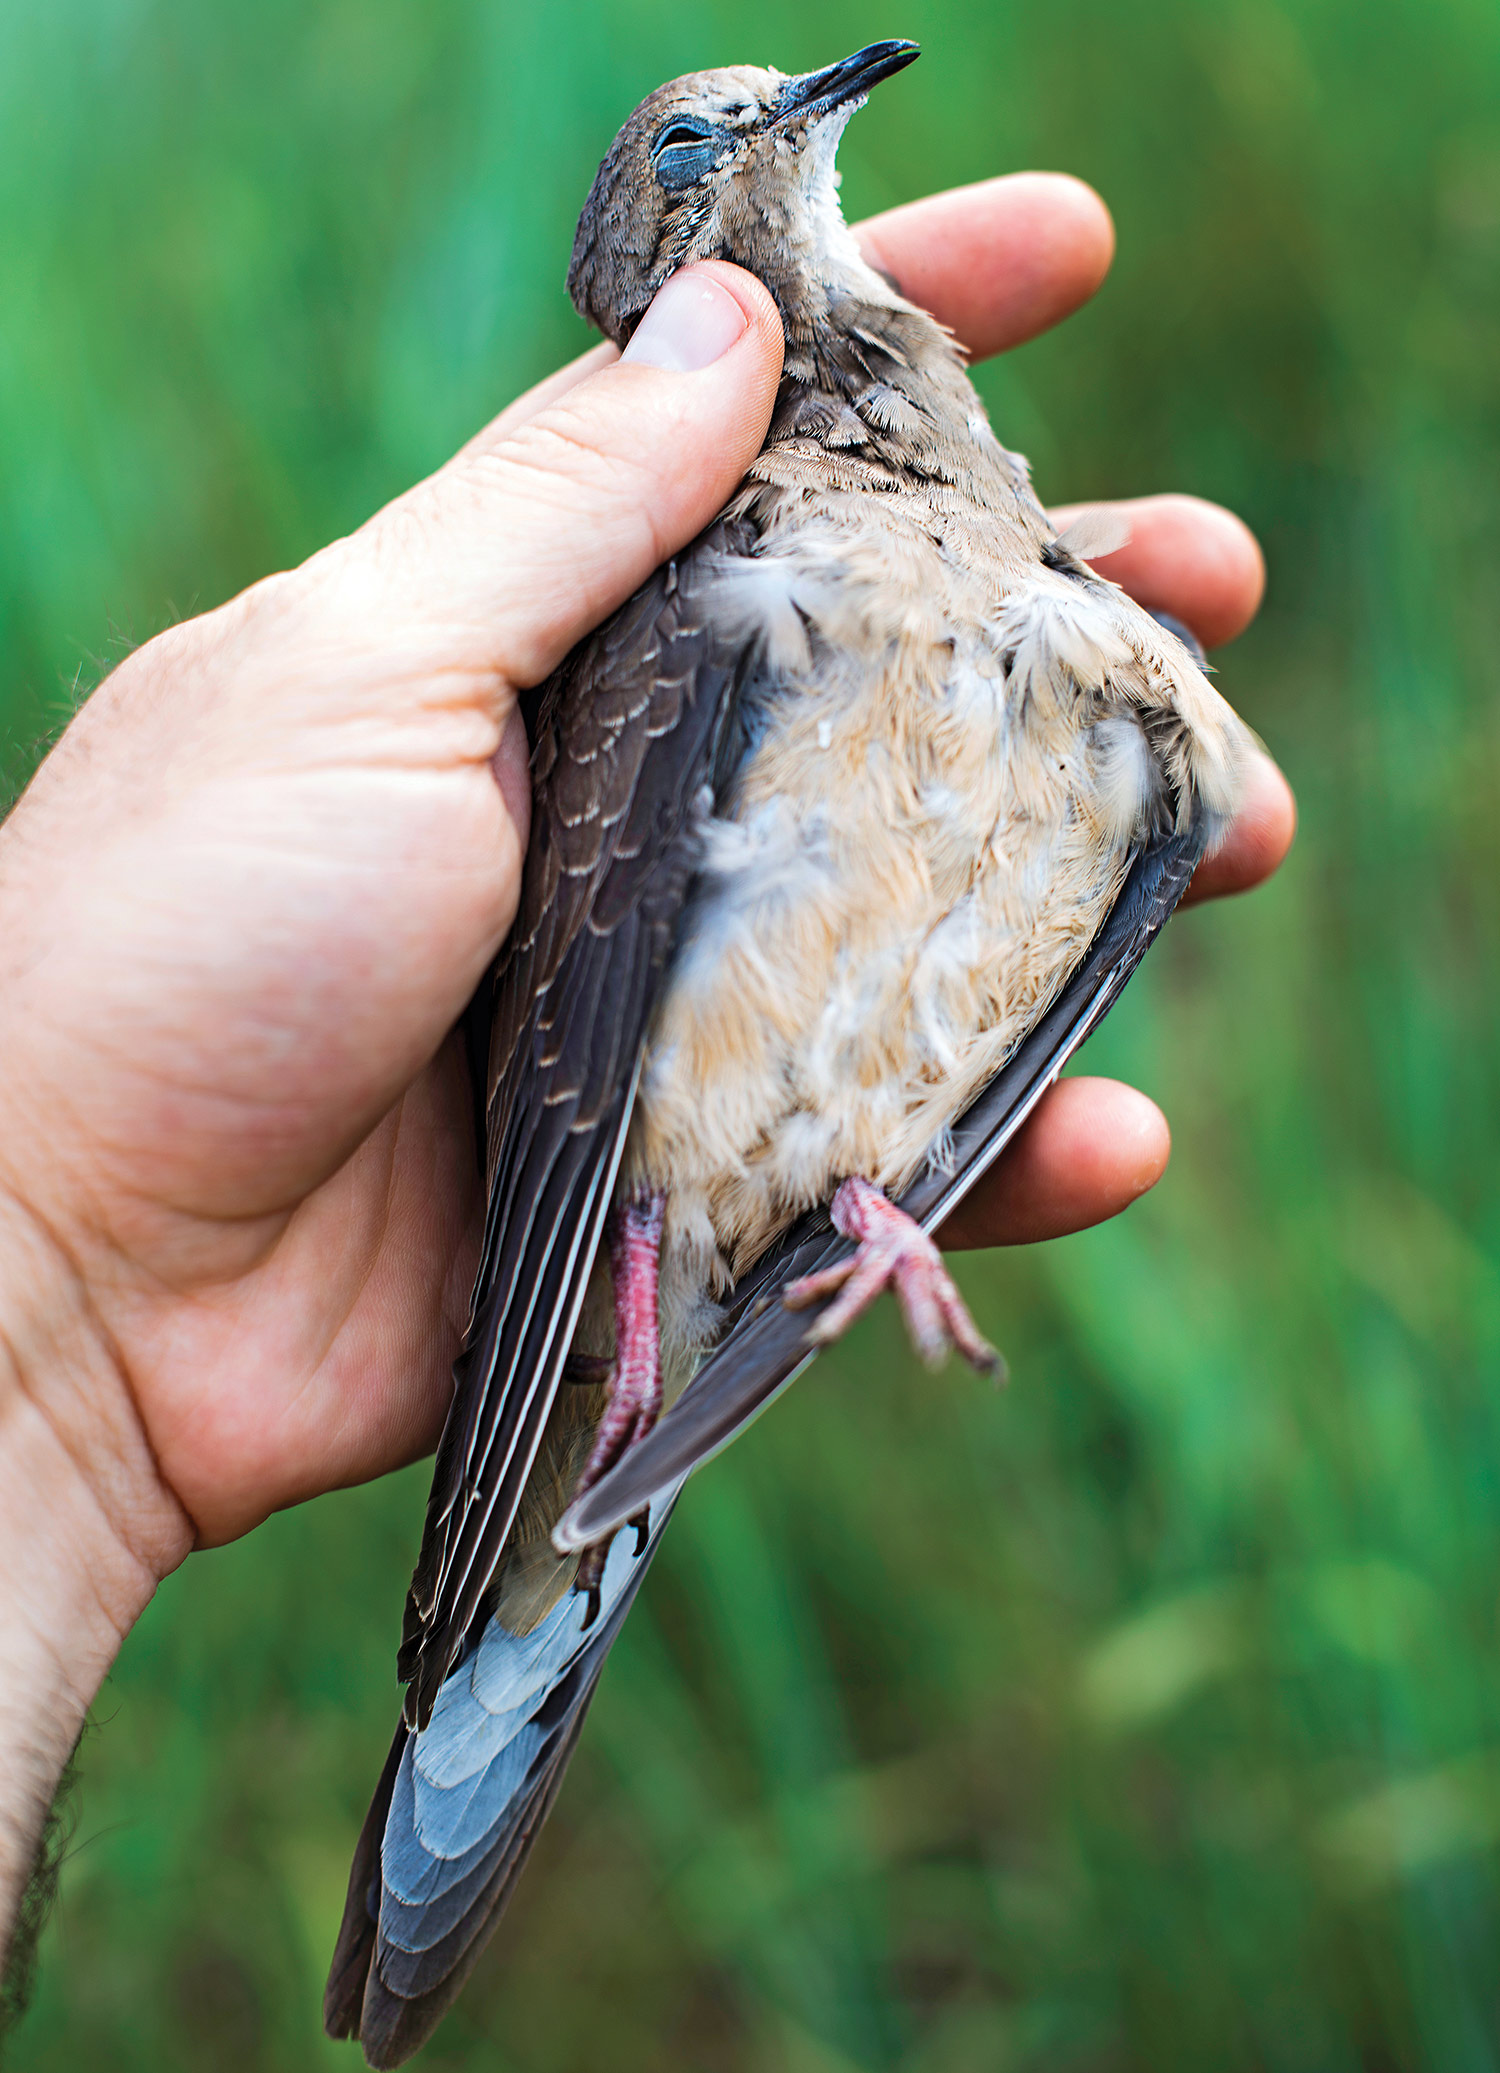 Dead dove in hand, grassy background